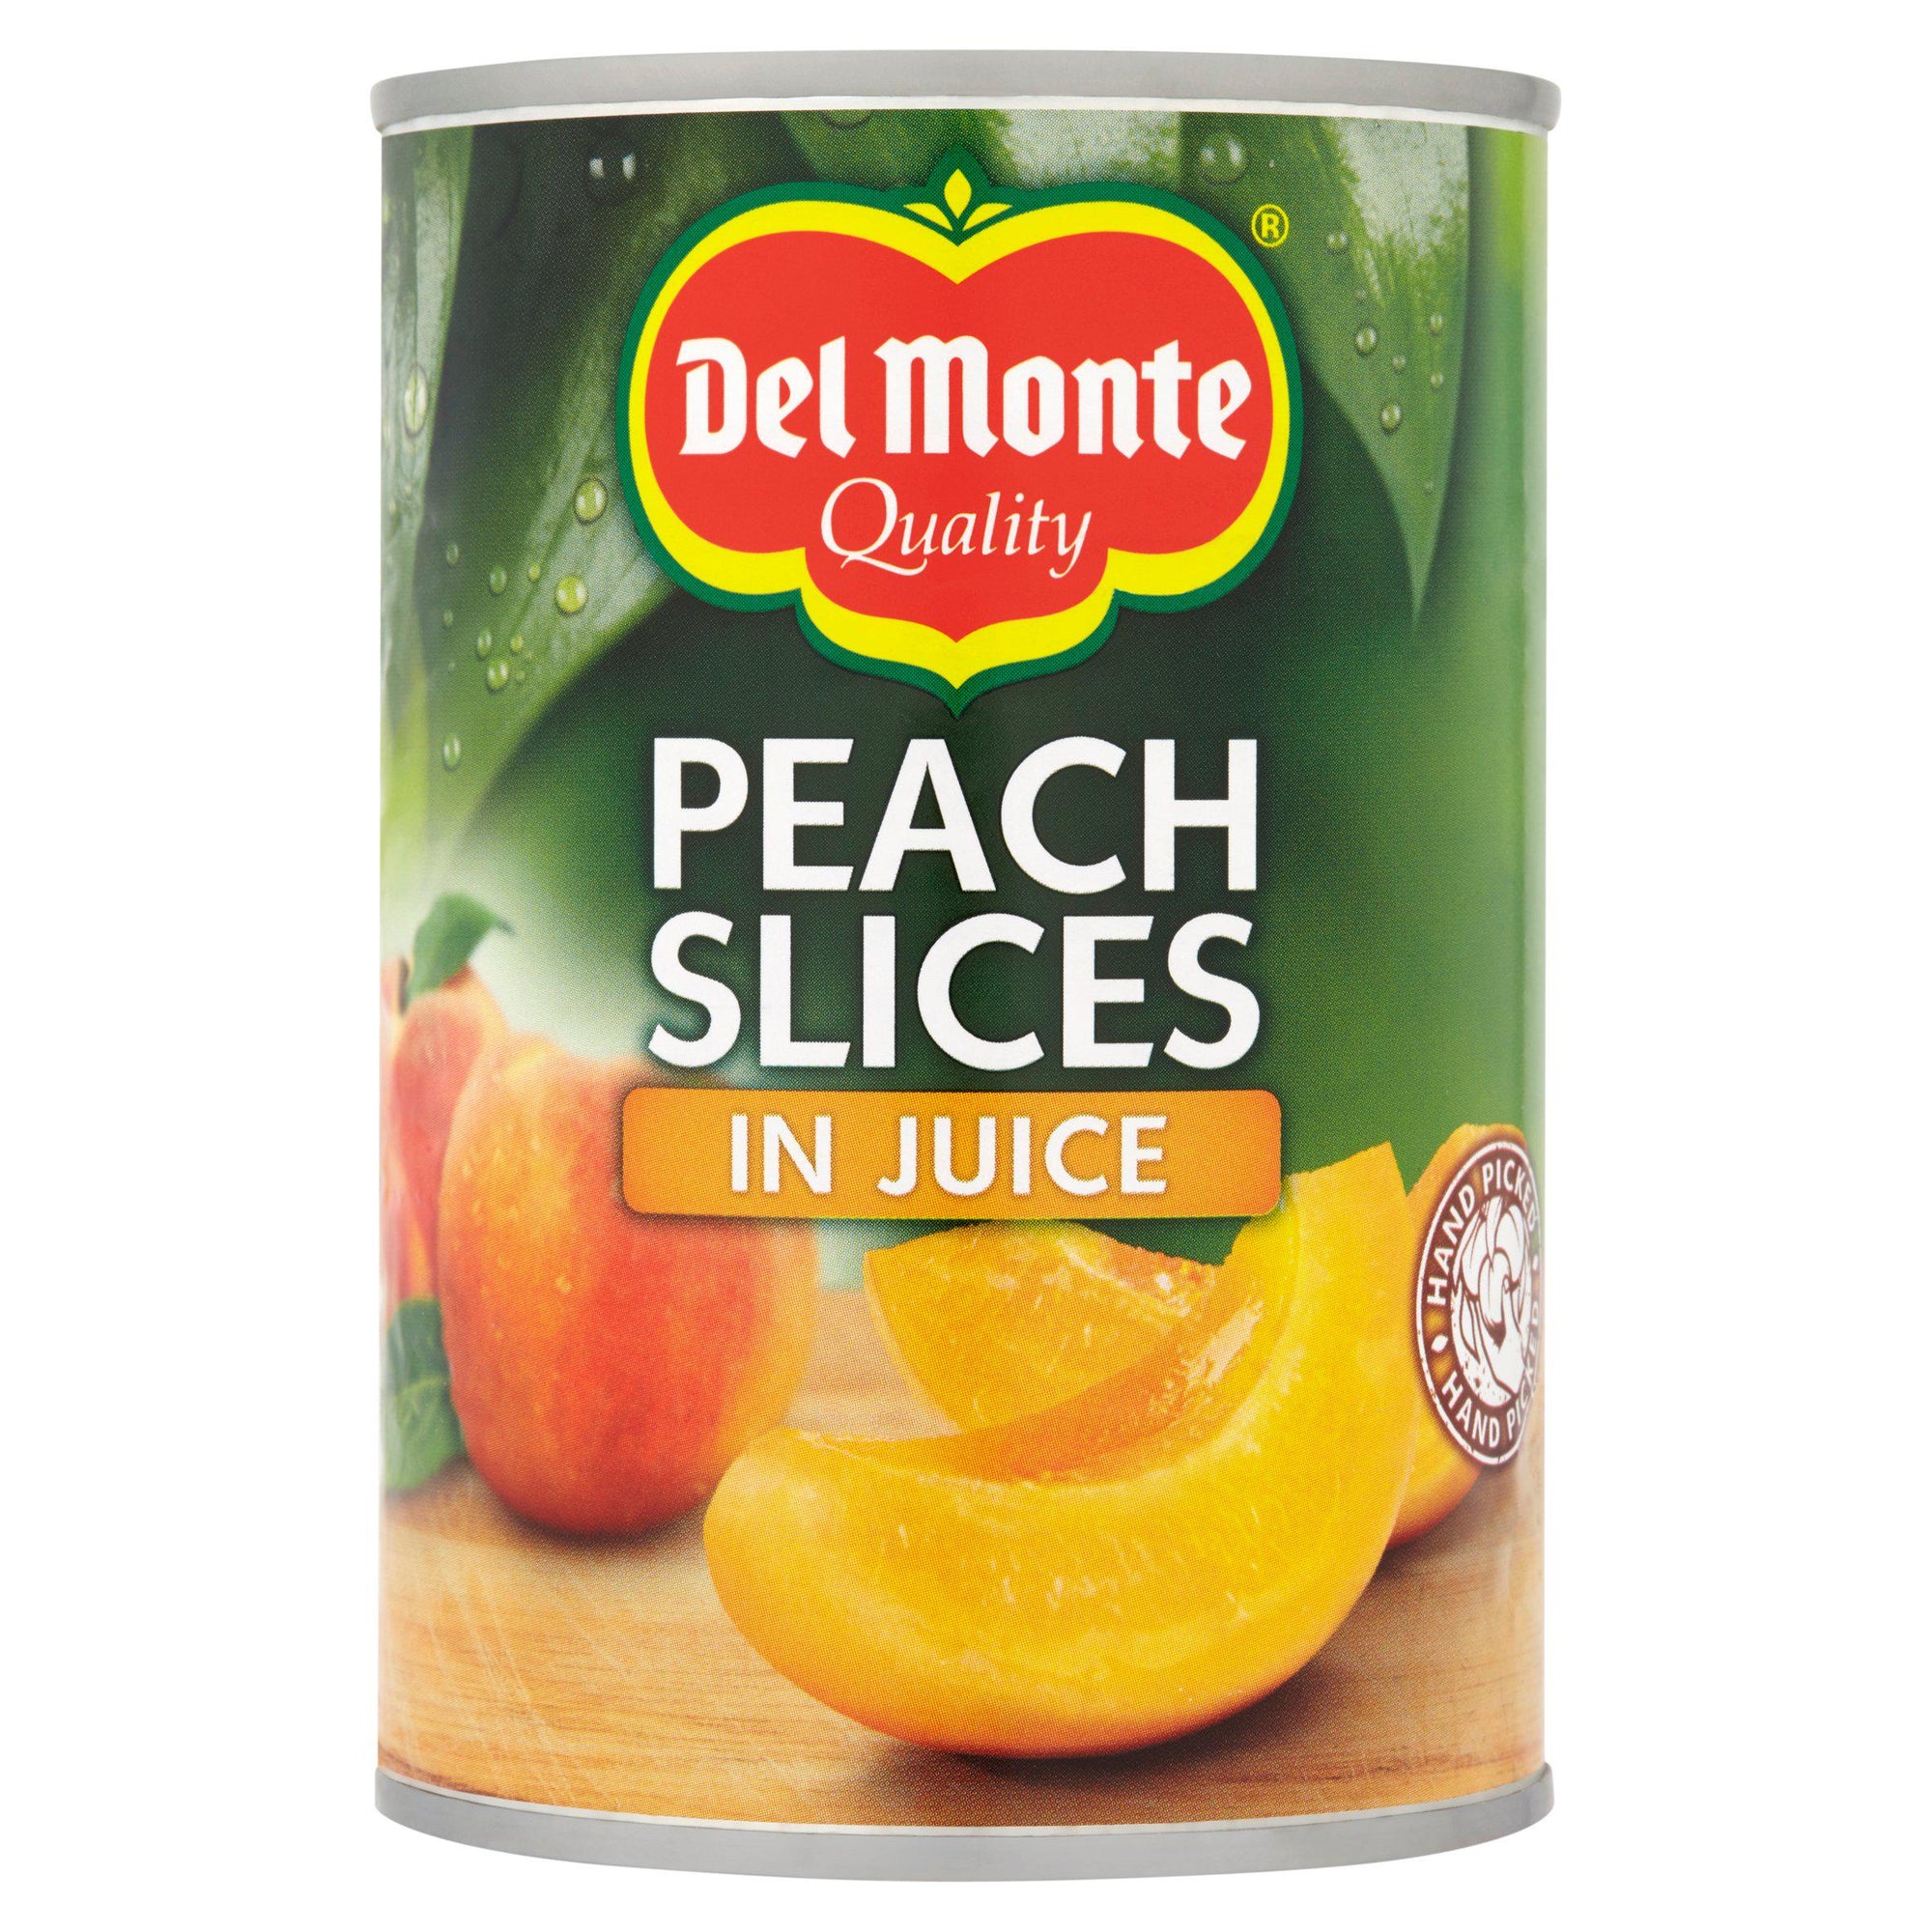 Del Monte Peach Slices In Juice Tin (415g)